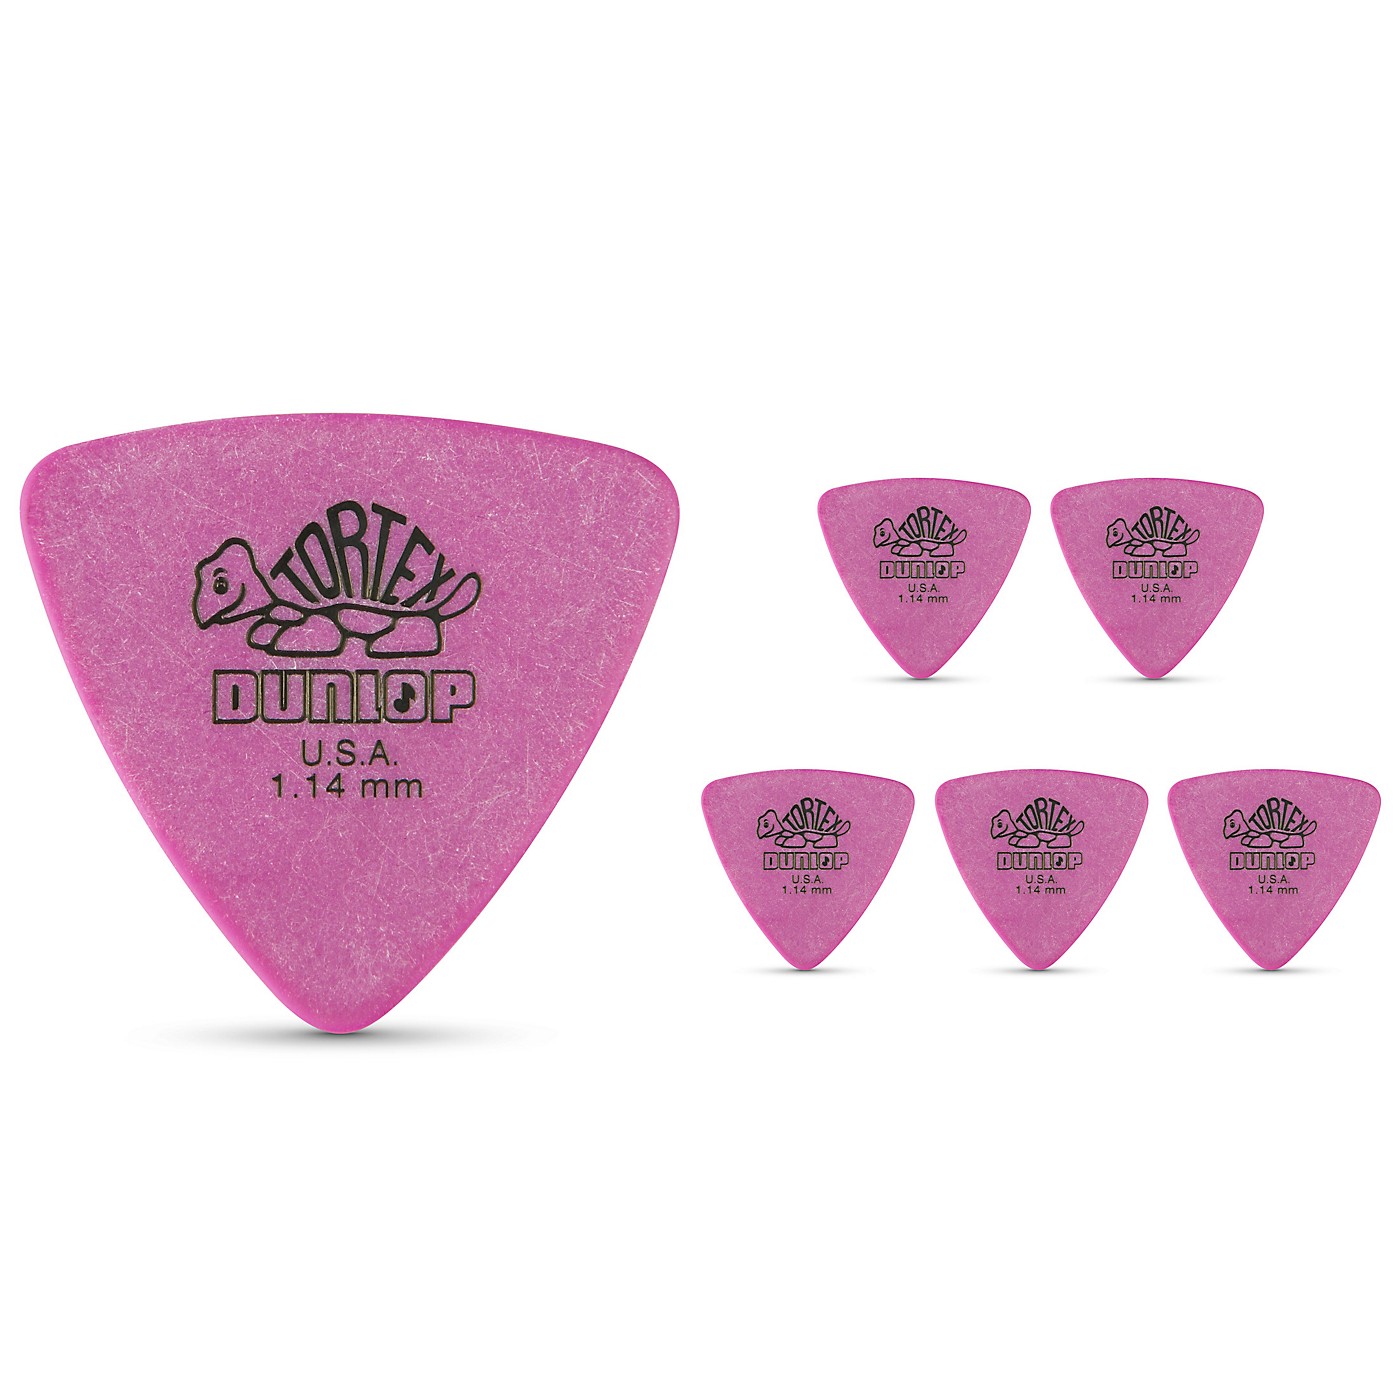 Dunlop Tortex Triangle Guitar Picks 6 Pack thumbnail